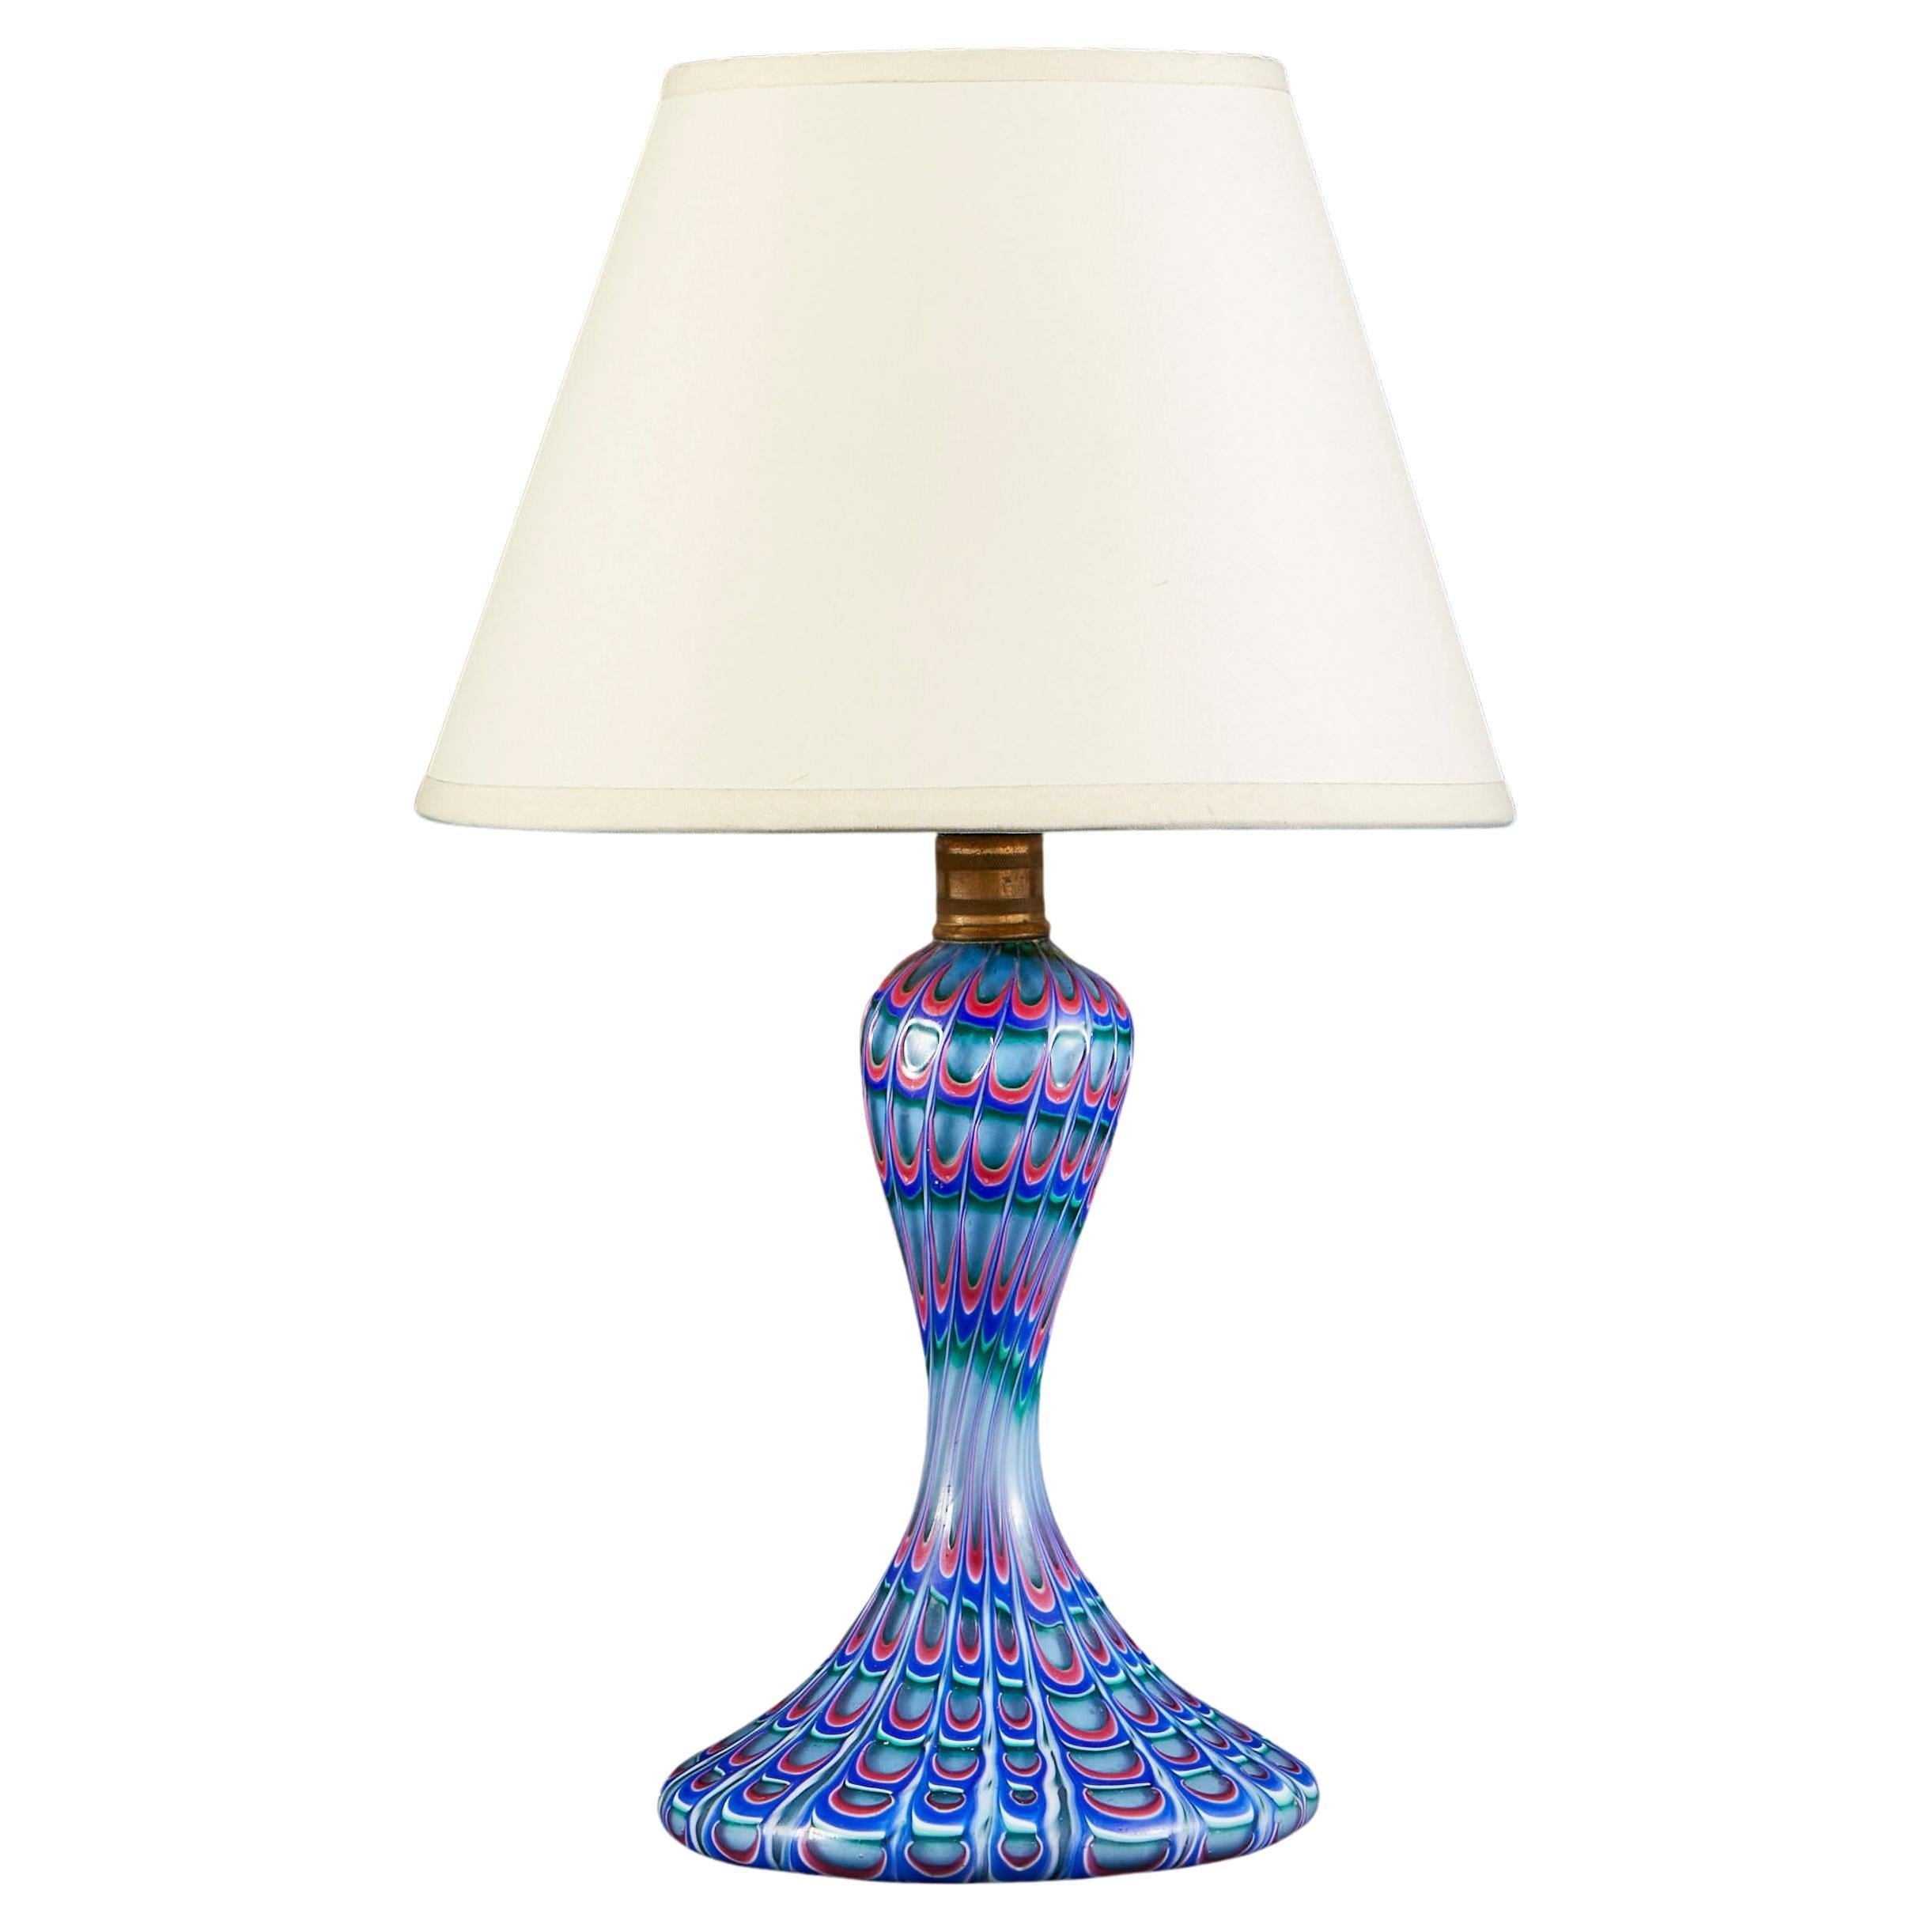 An Unusual Peacock Glaze Murano Lamp by Seguso